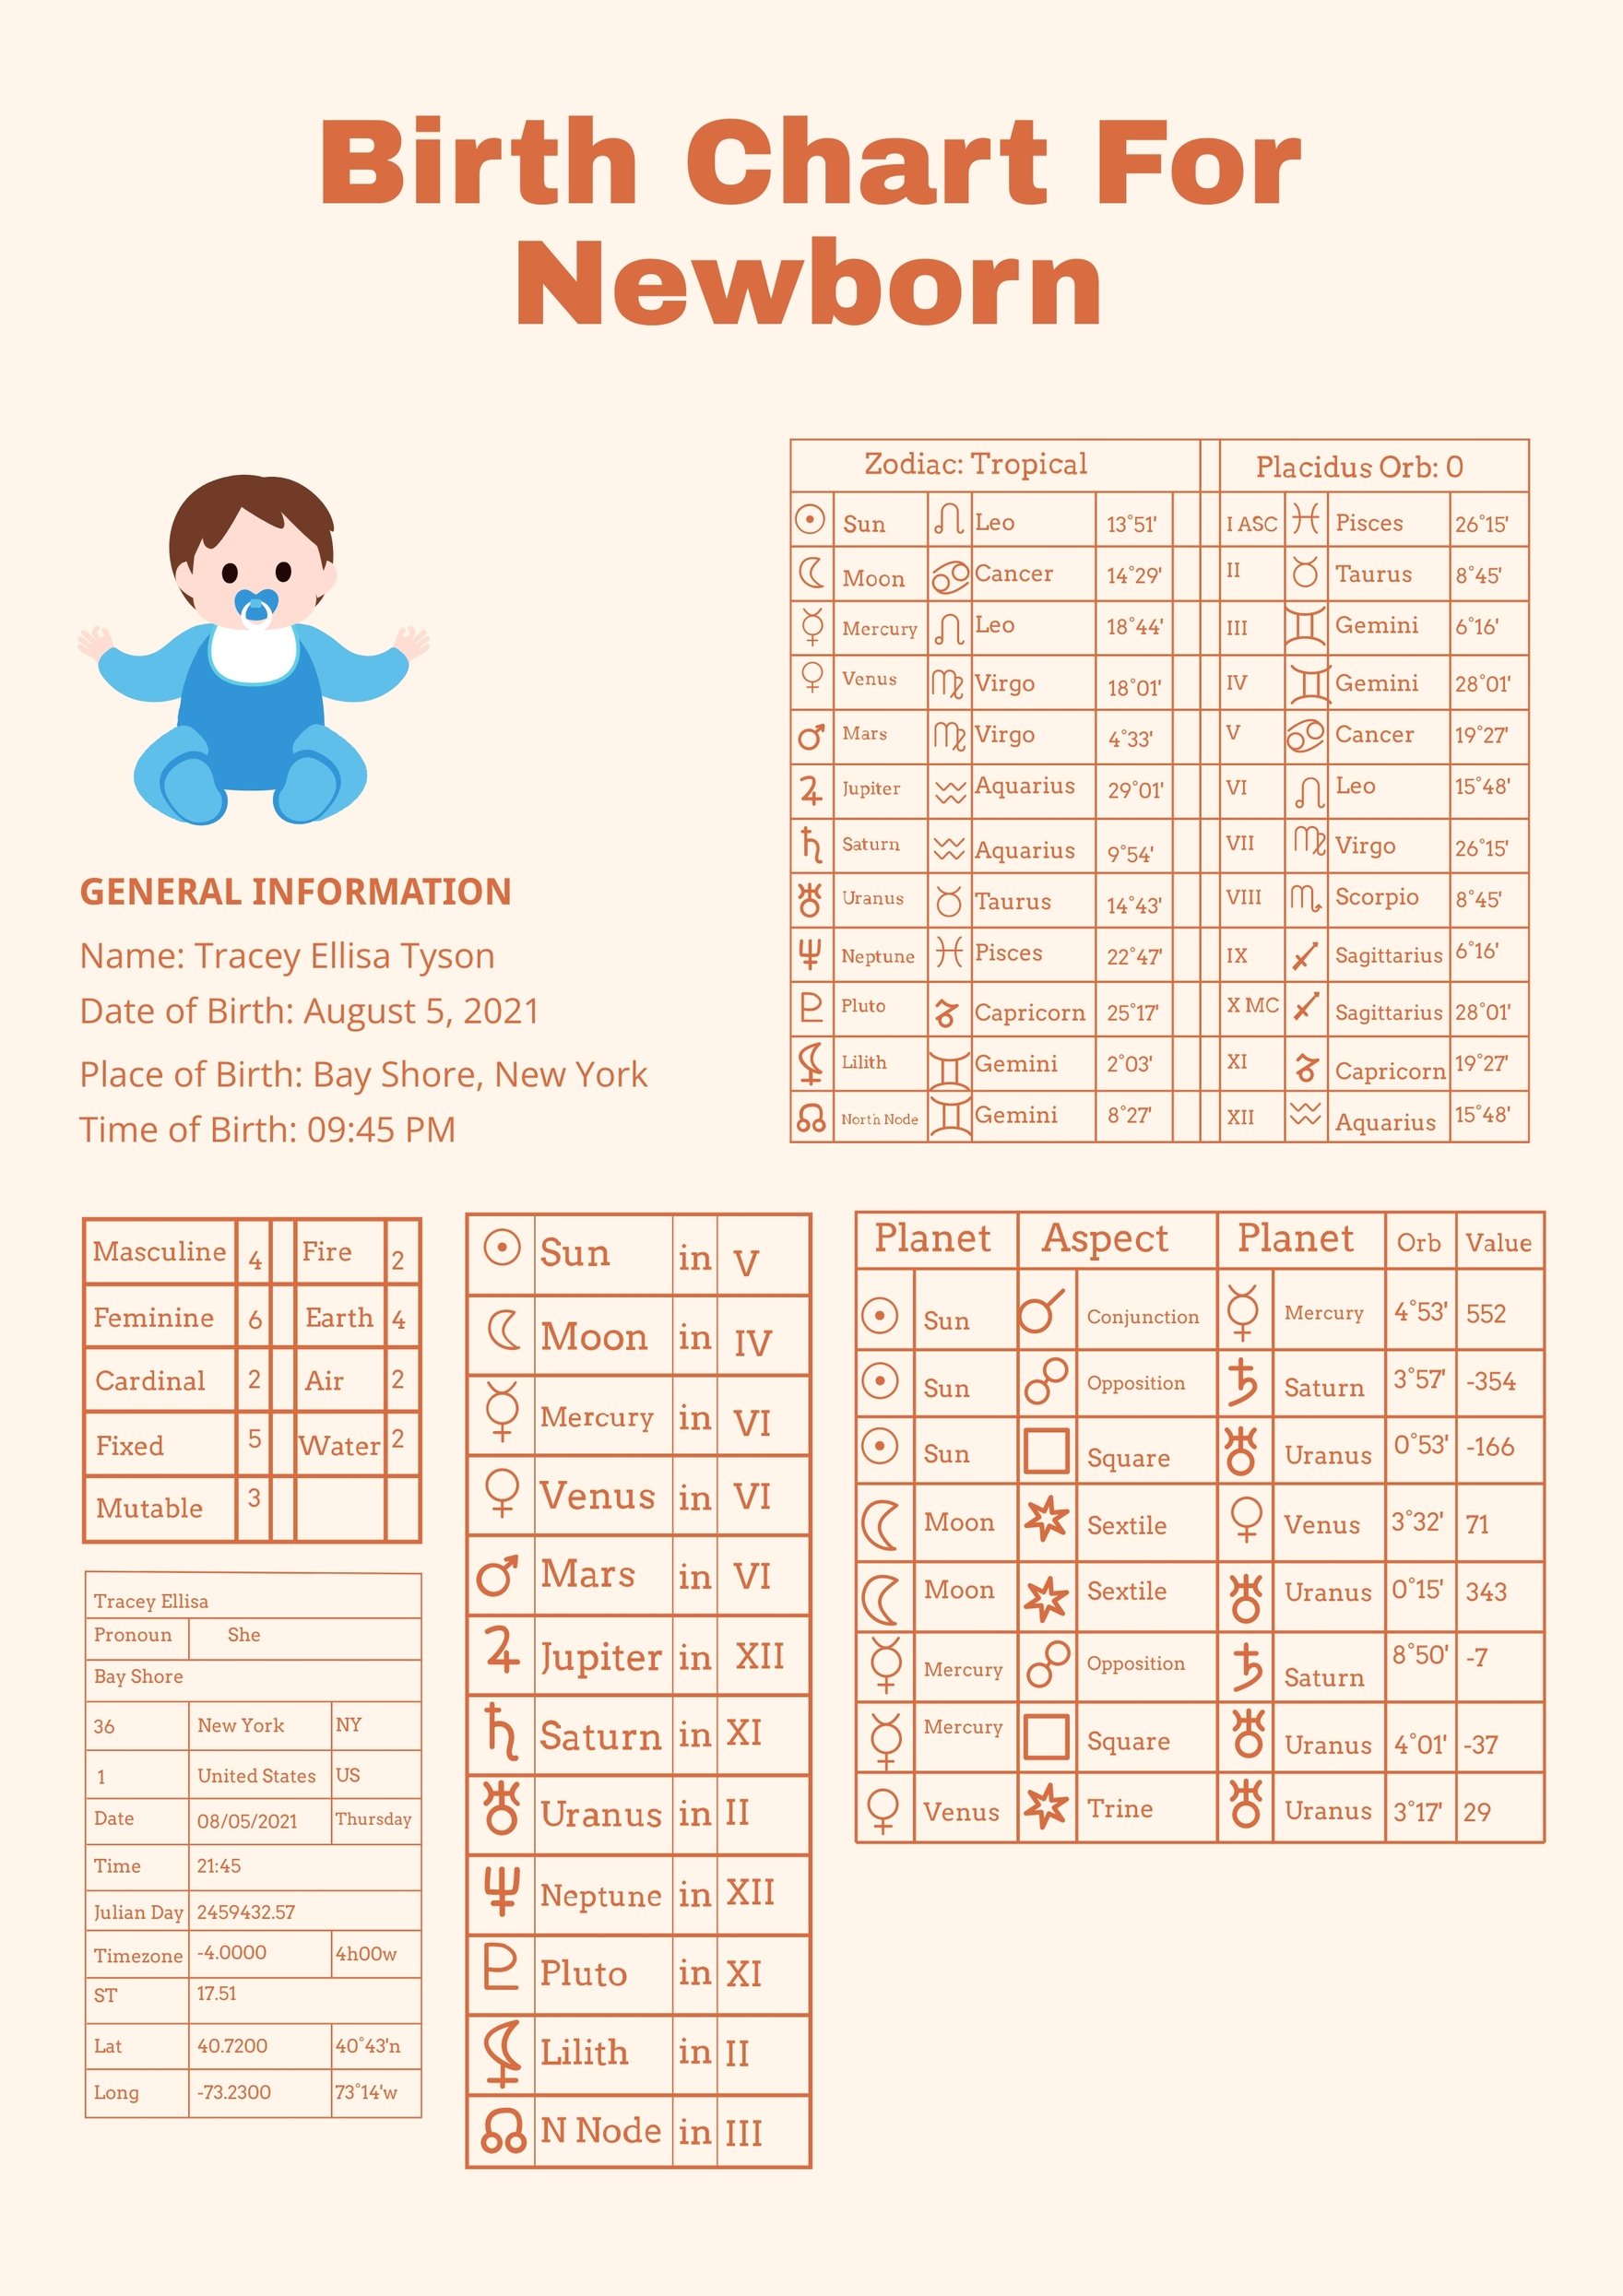 Birth Chart For Newborn in PDF, Illustrator